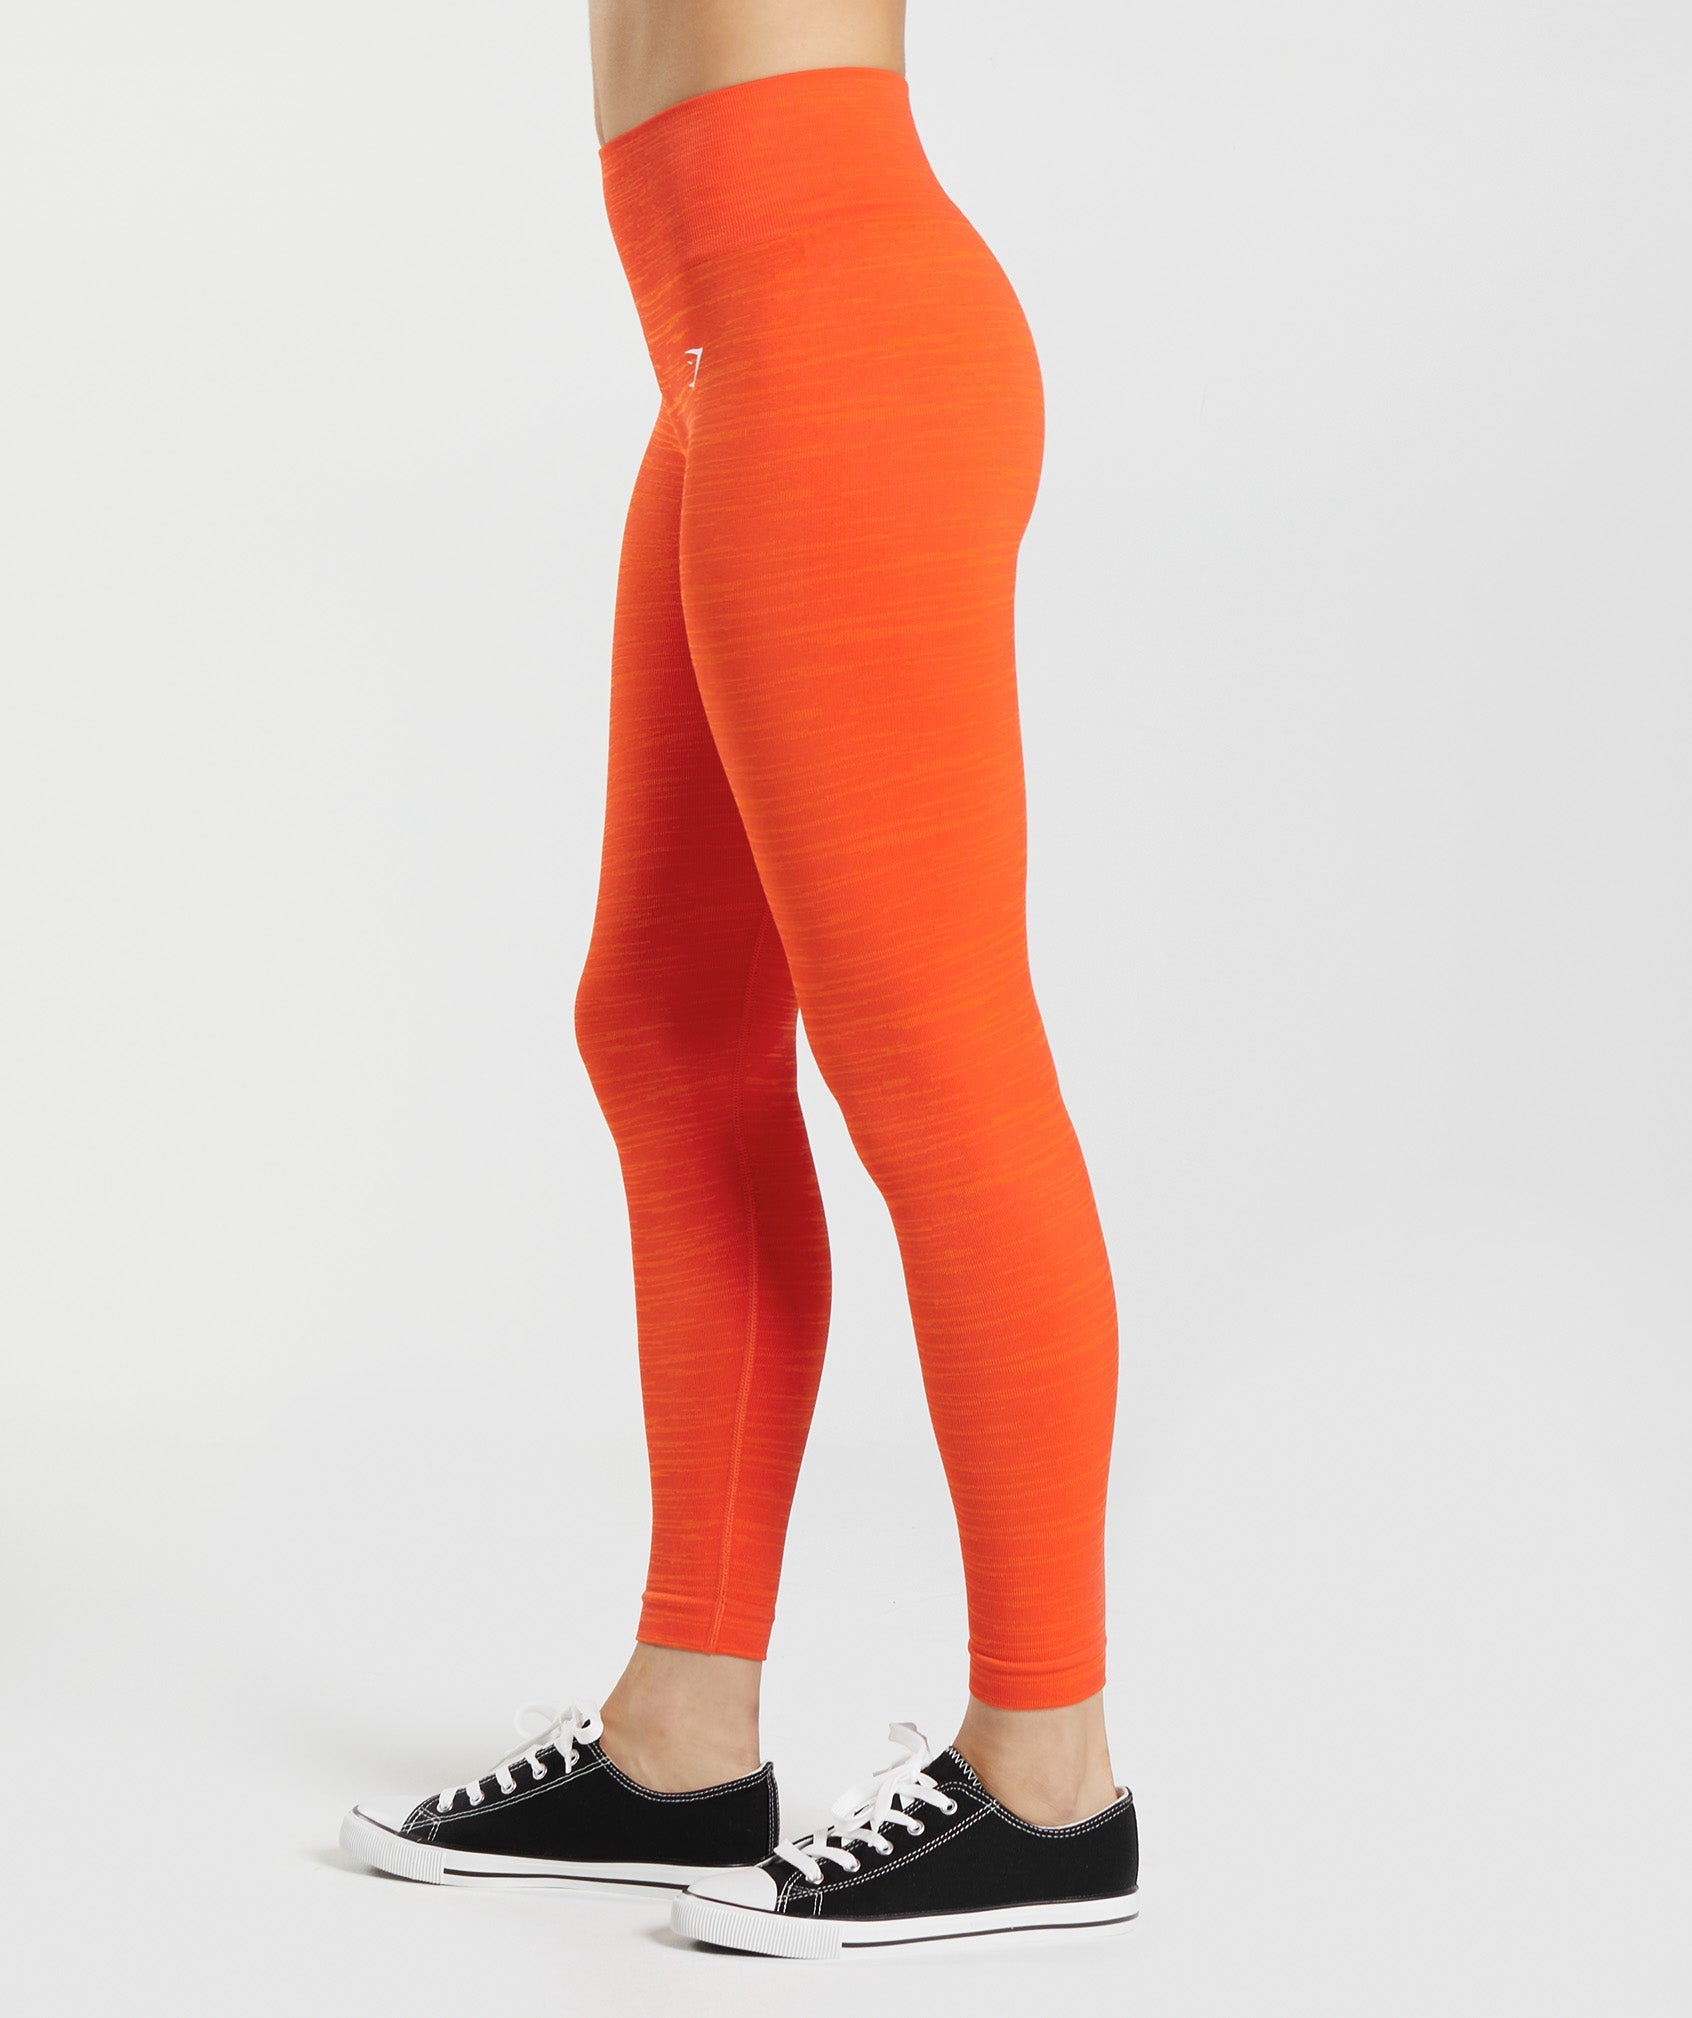 Sold ALO Yoga Moto Leggings in Sunbaked orange XS